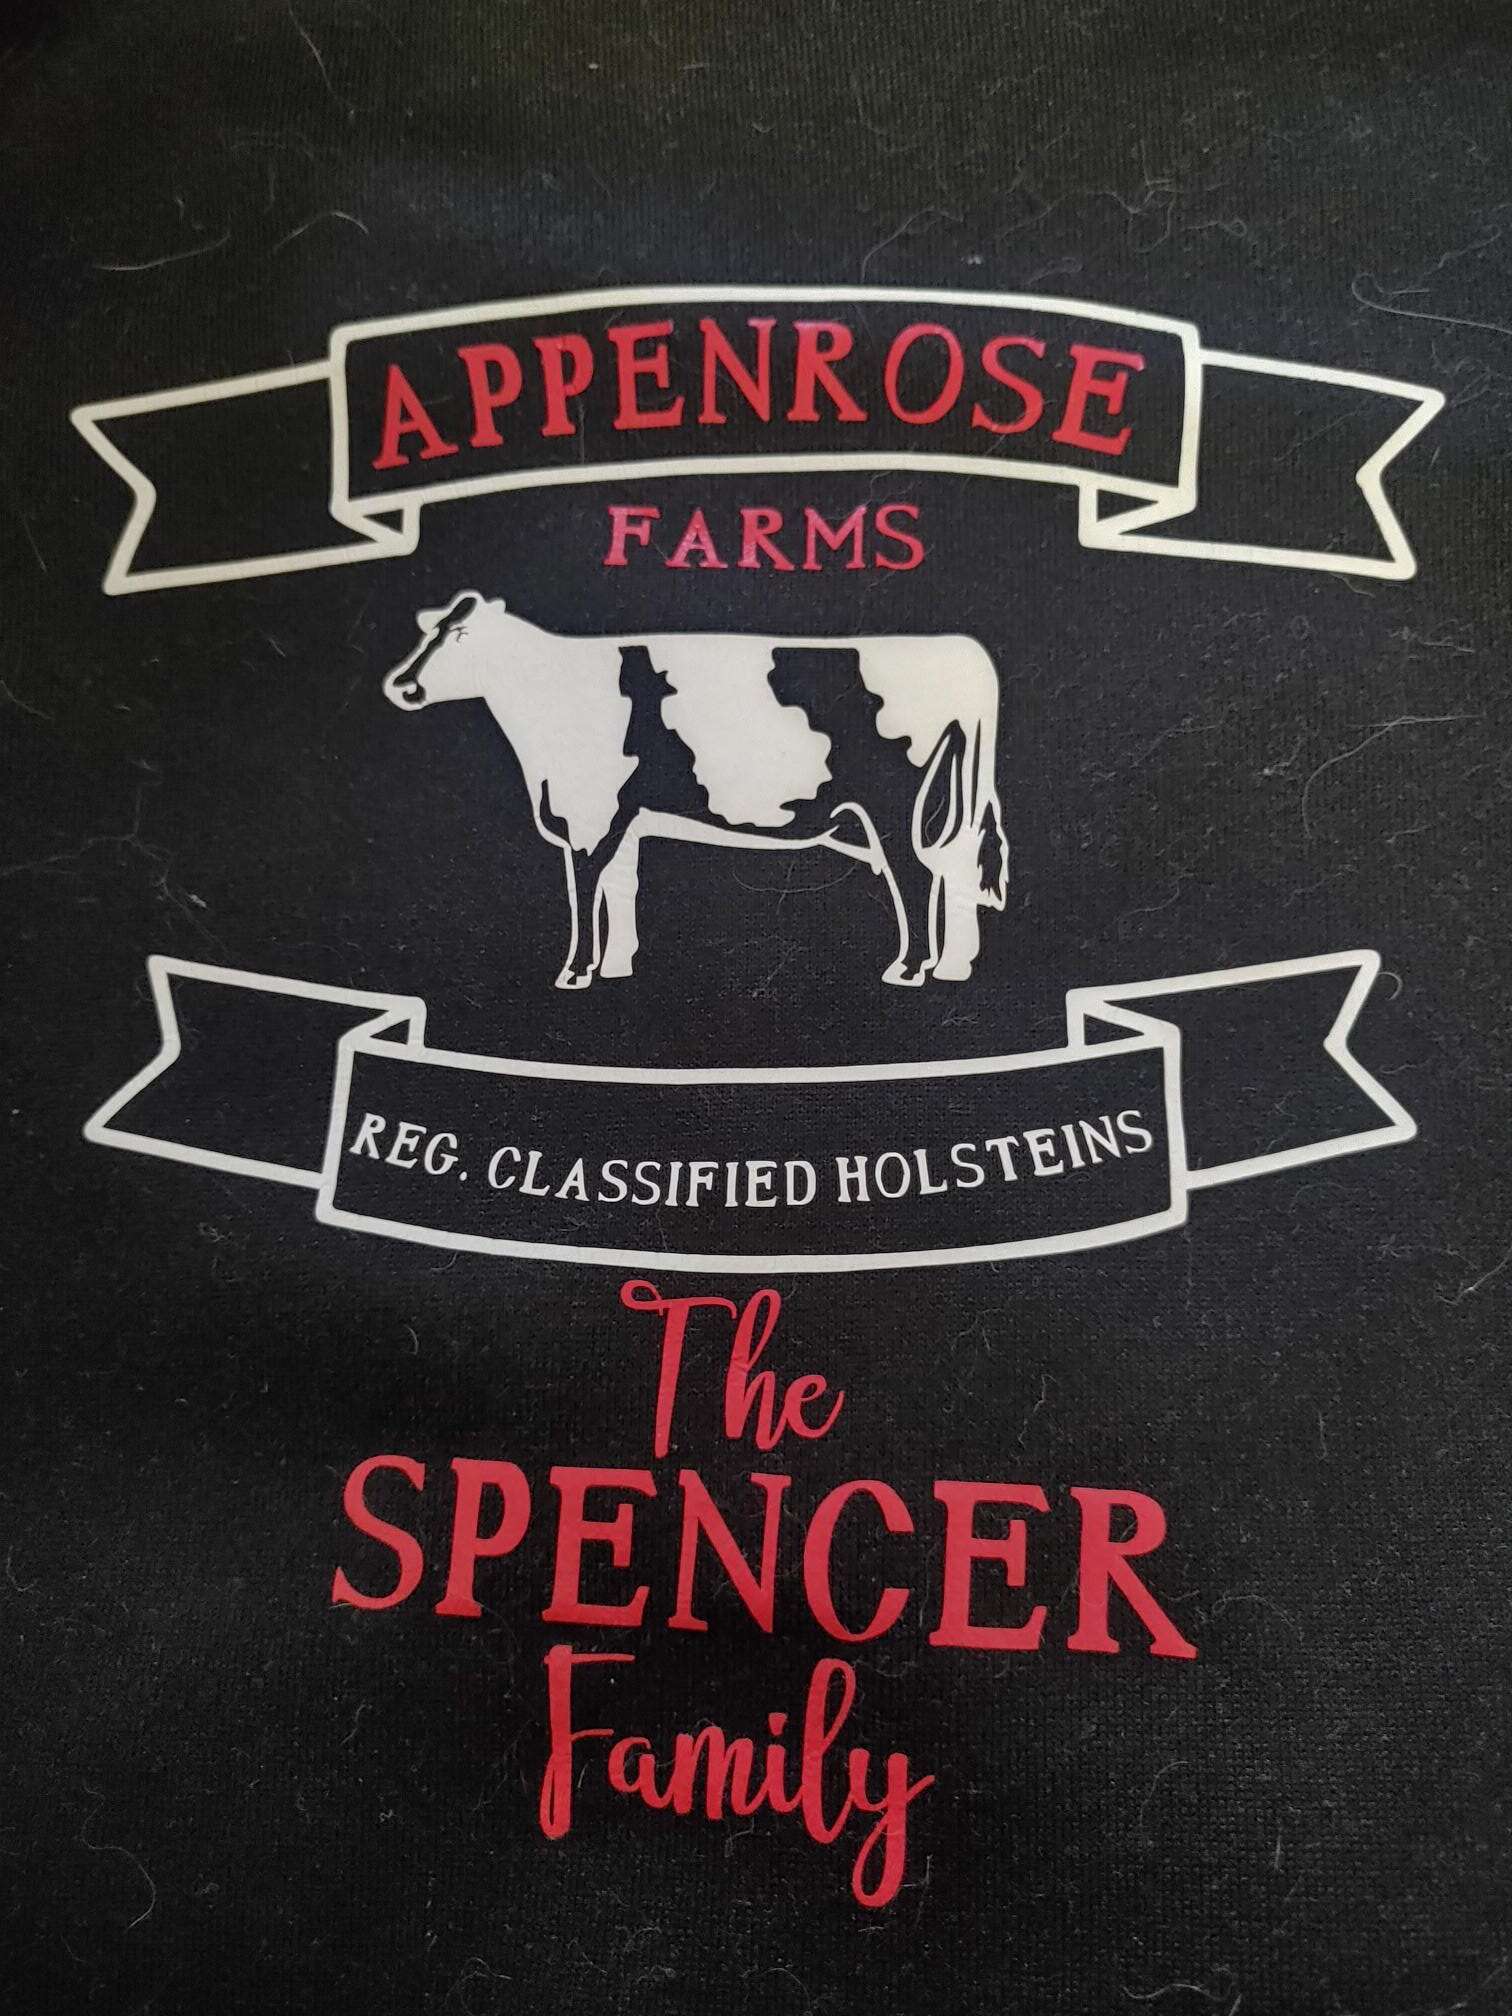 Appenrose Farms